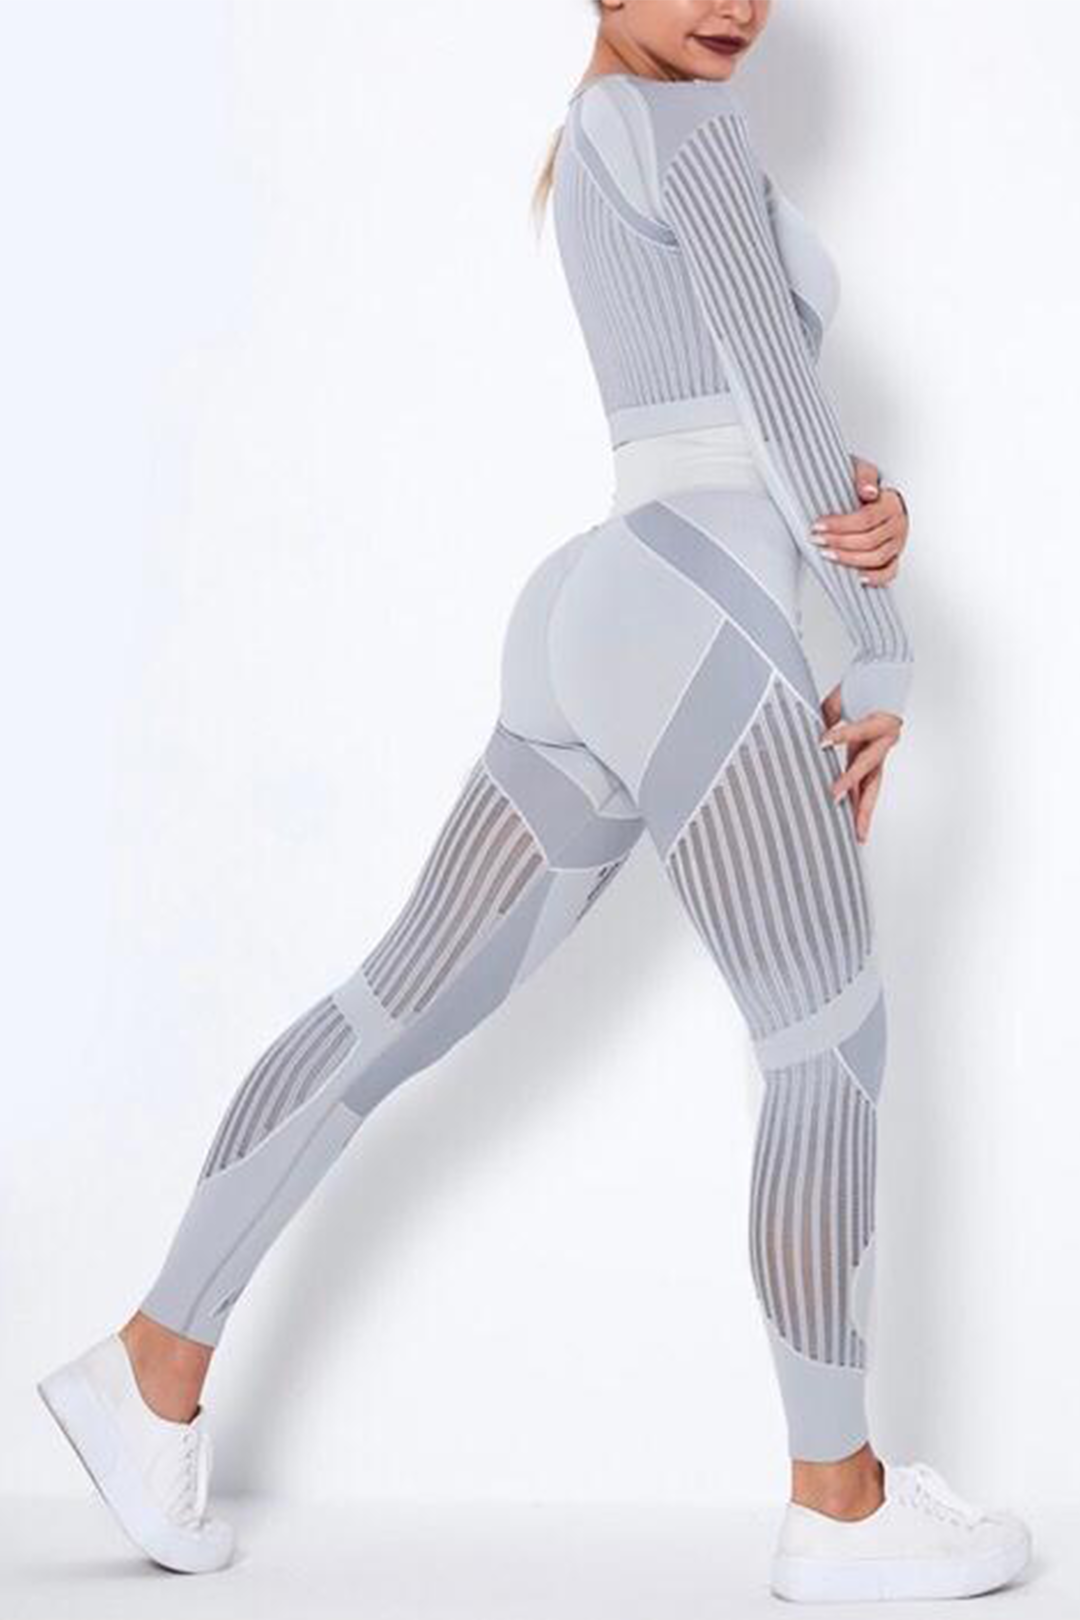 Mesh two piece crop top pants set | eBay